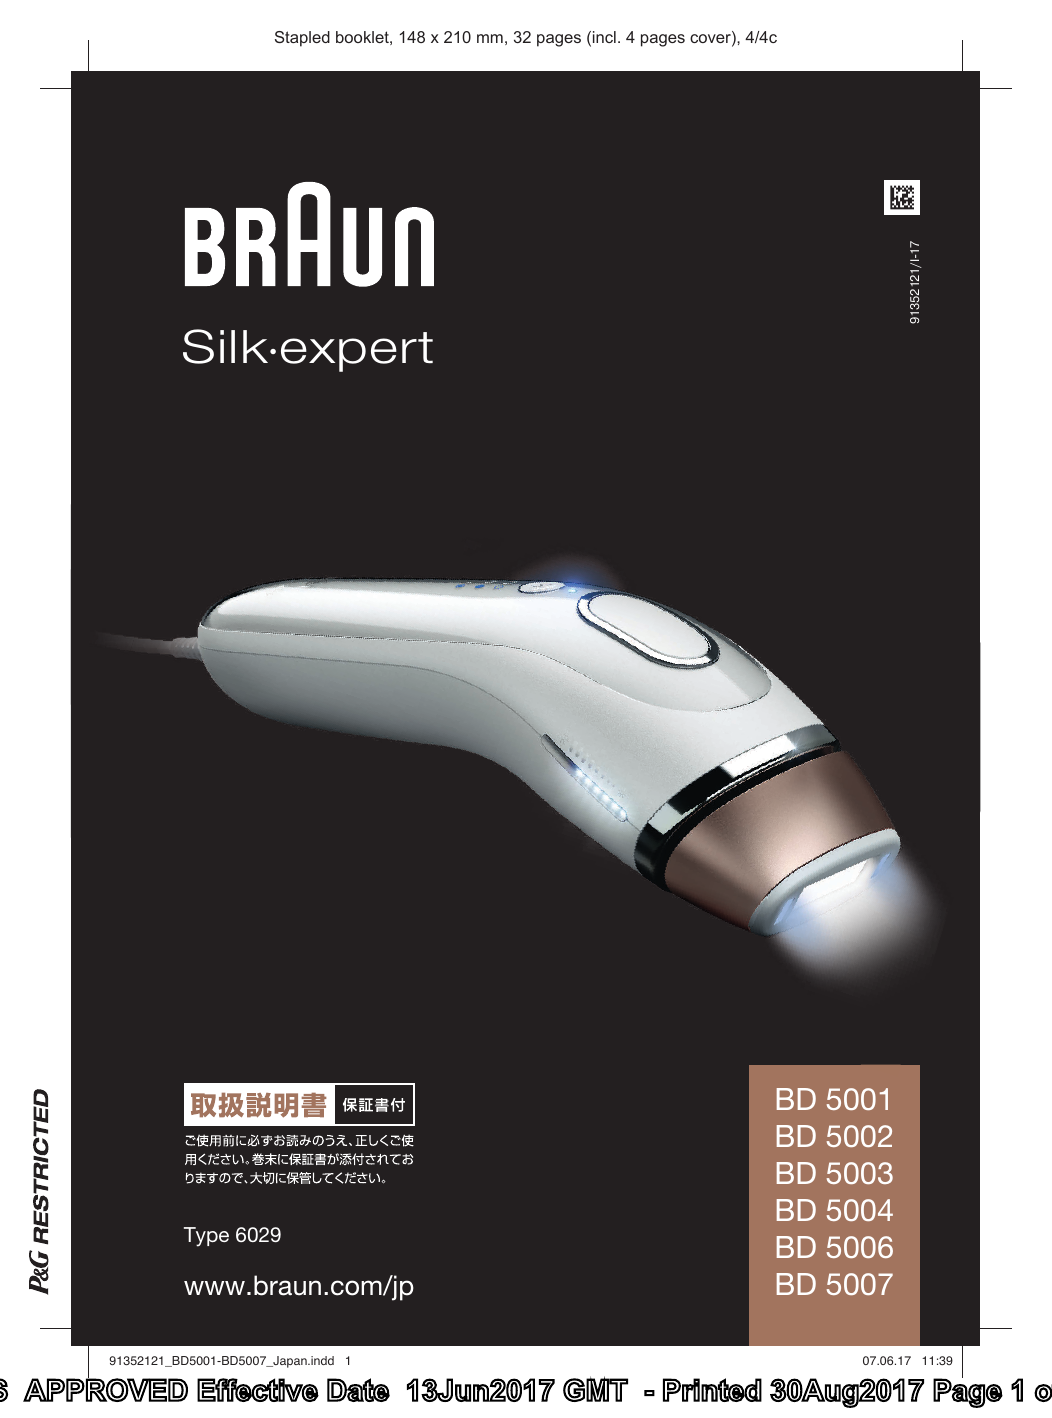 BRAUN 光美容器 シルクエキスパート BD-5006 使用説明書付き - 美容/健康